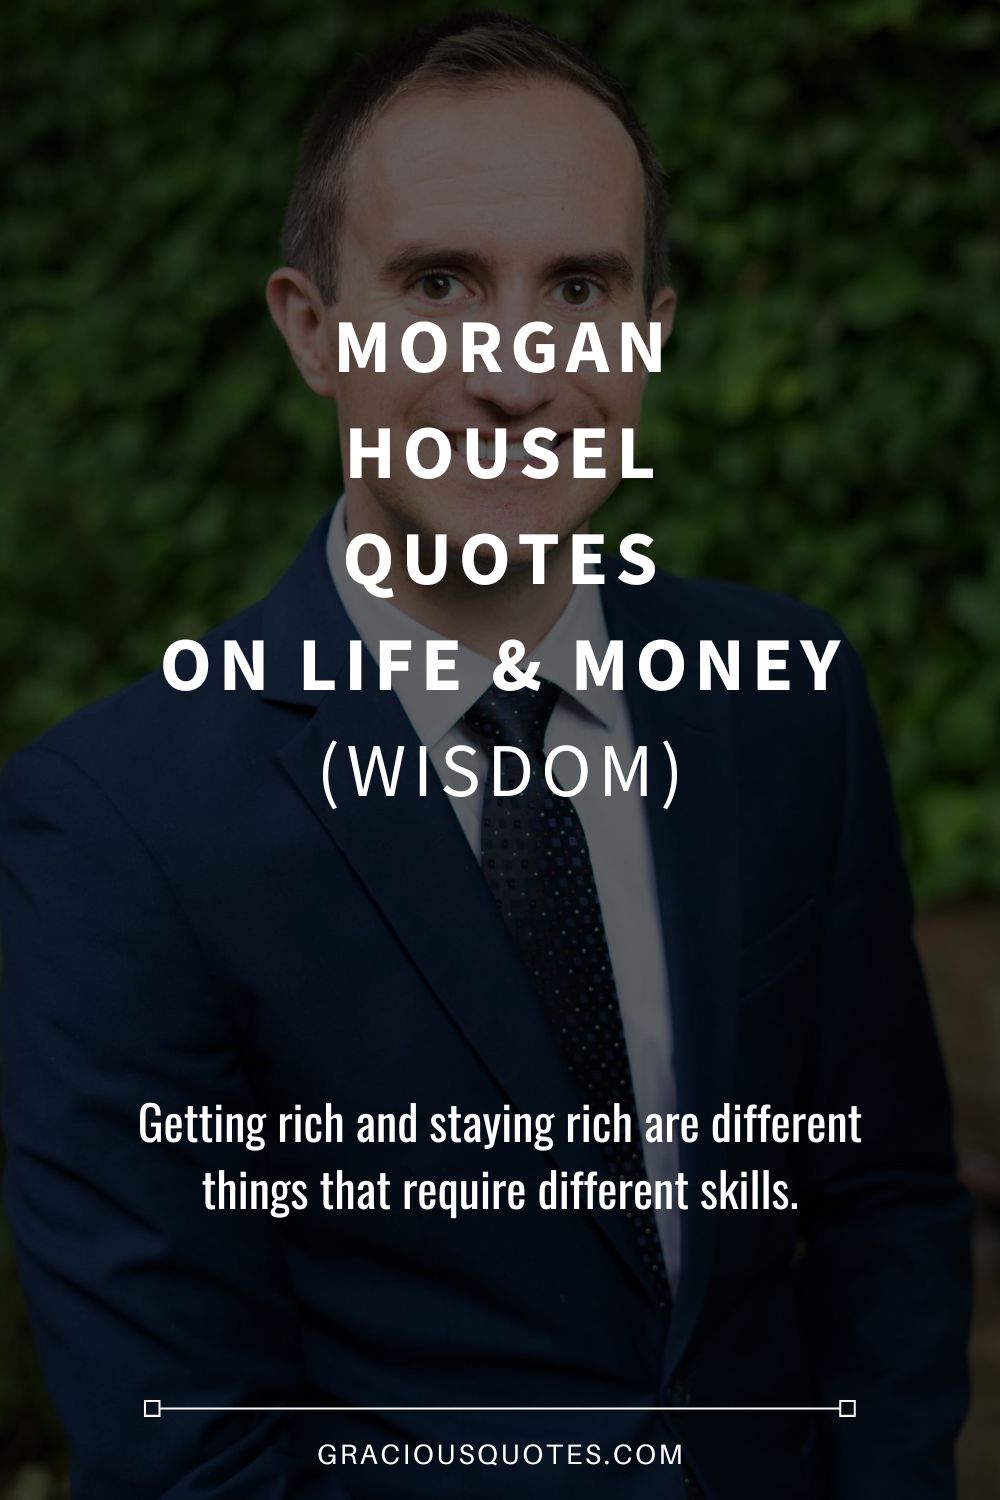 Morgan Housel Quotes on Life & Money (WISDOM) - Gracious Quotes